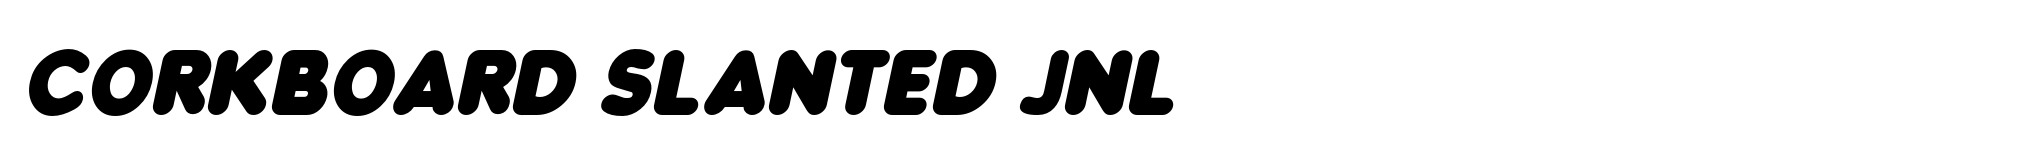 Corkboard Slanted JNL image